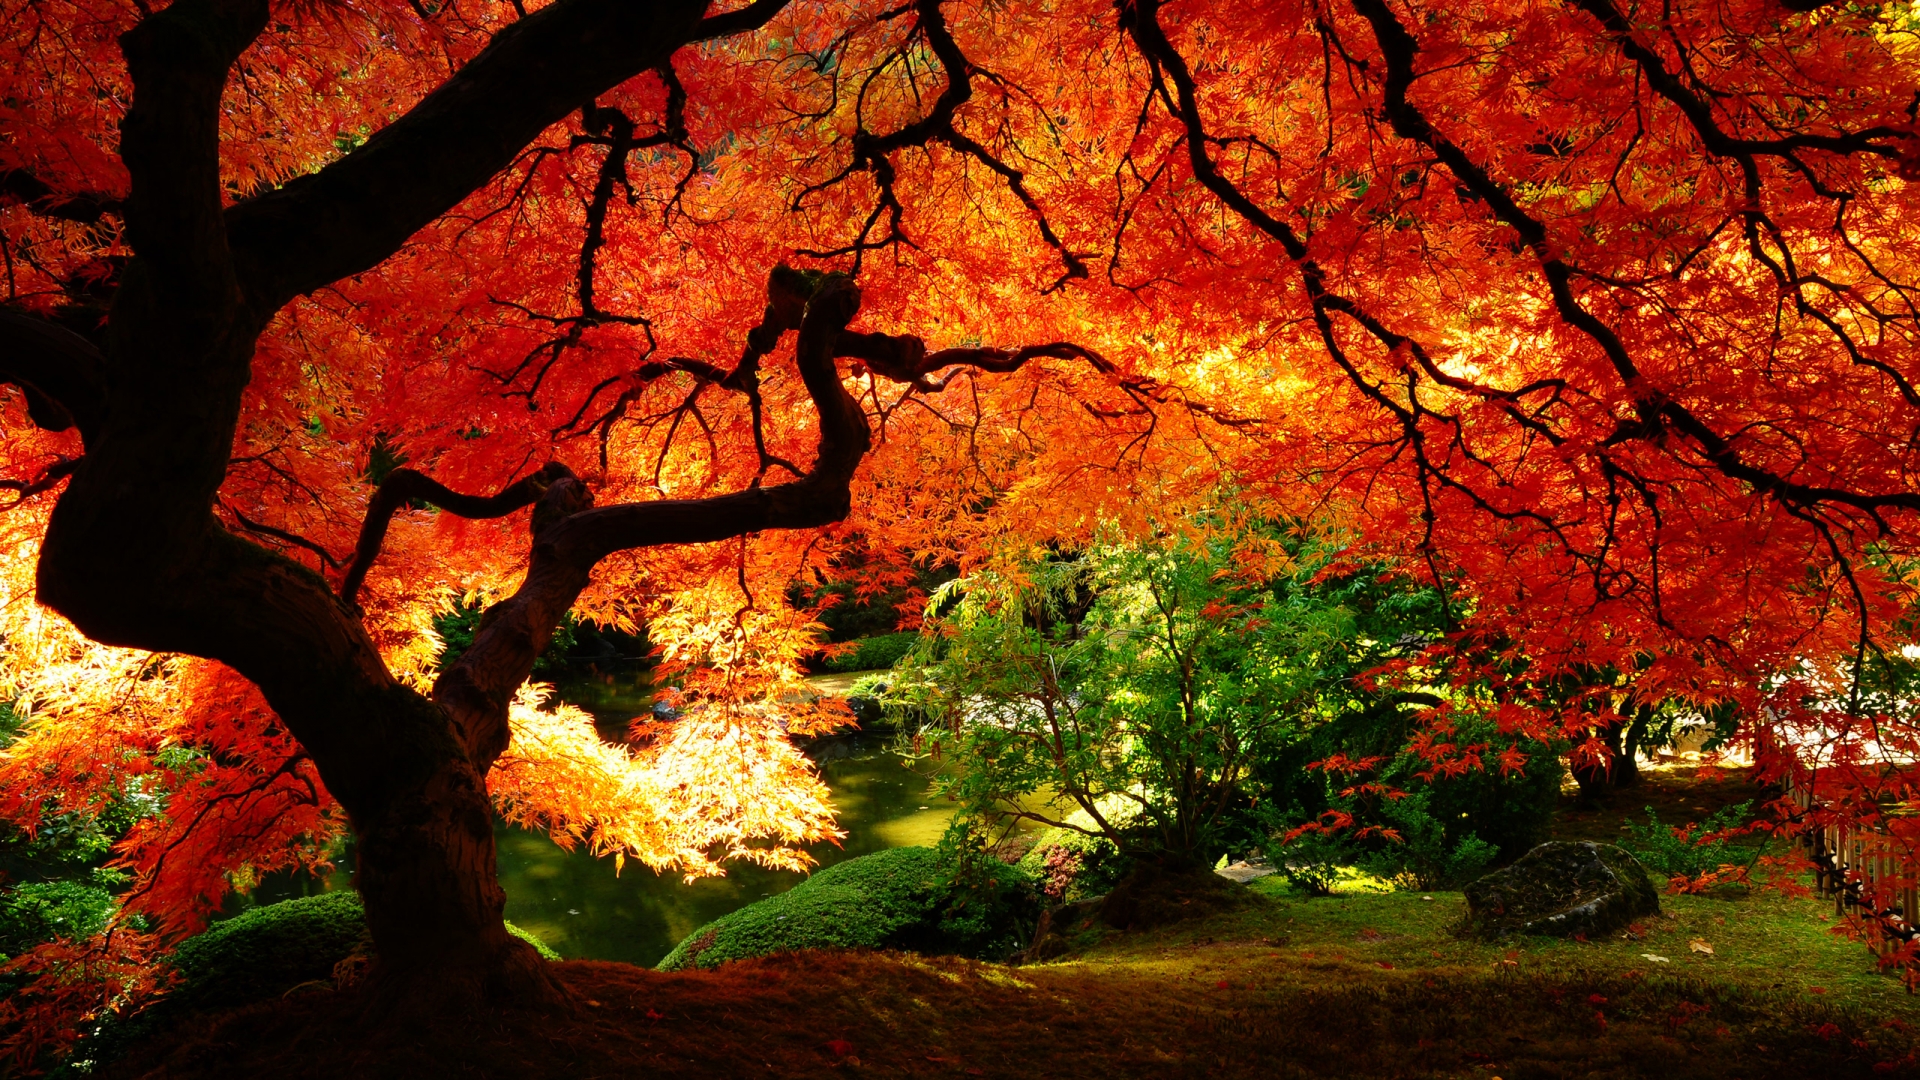 Autumn Fall Background